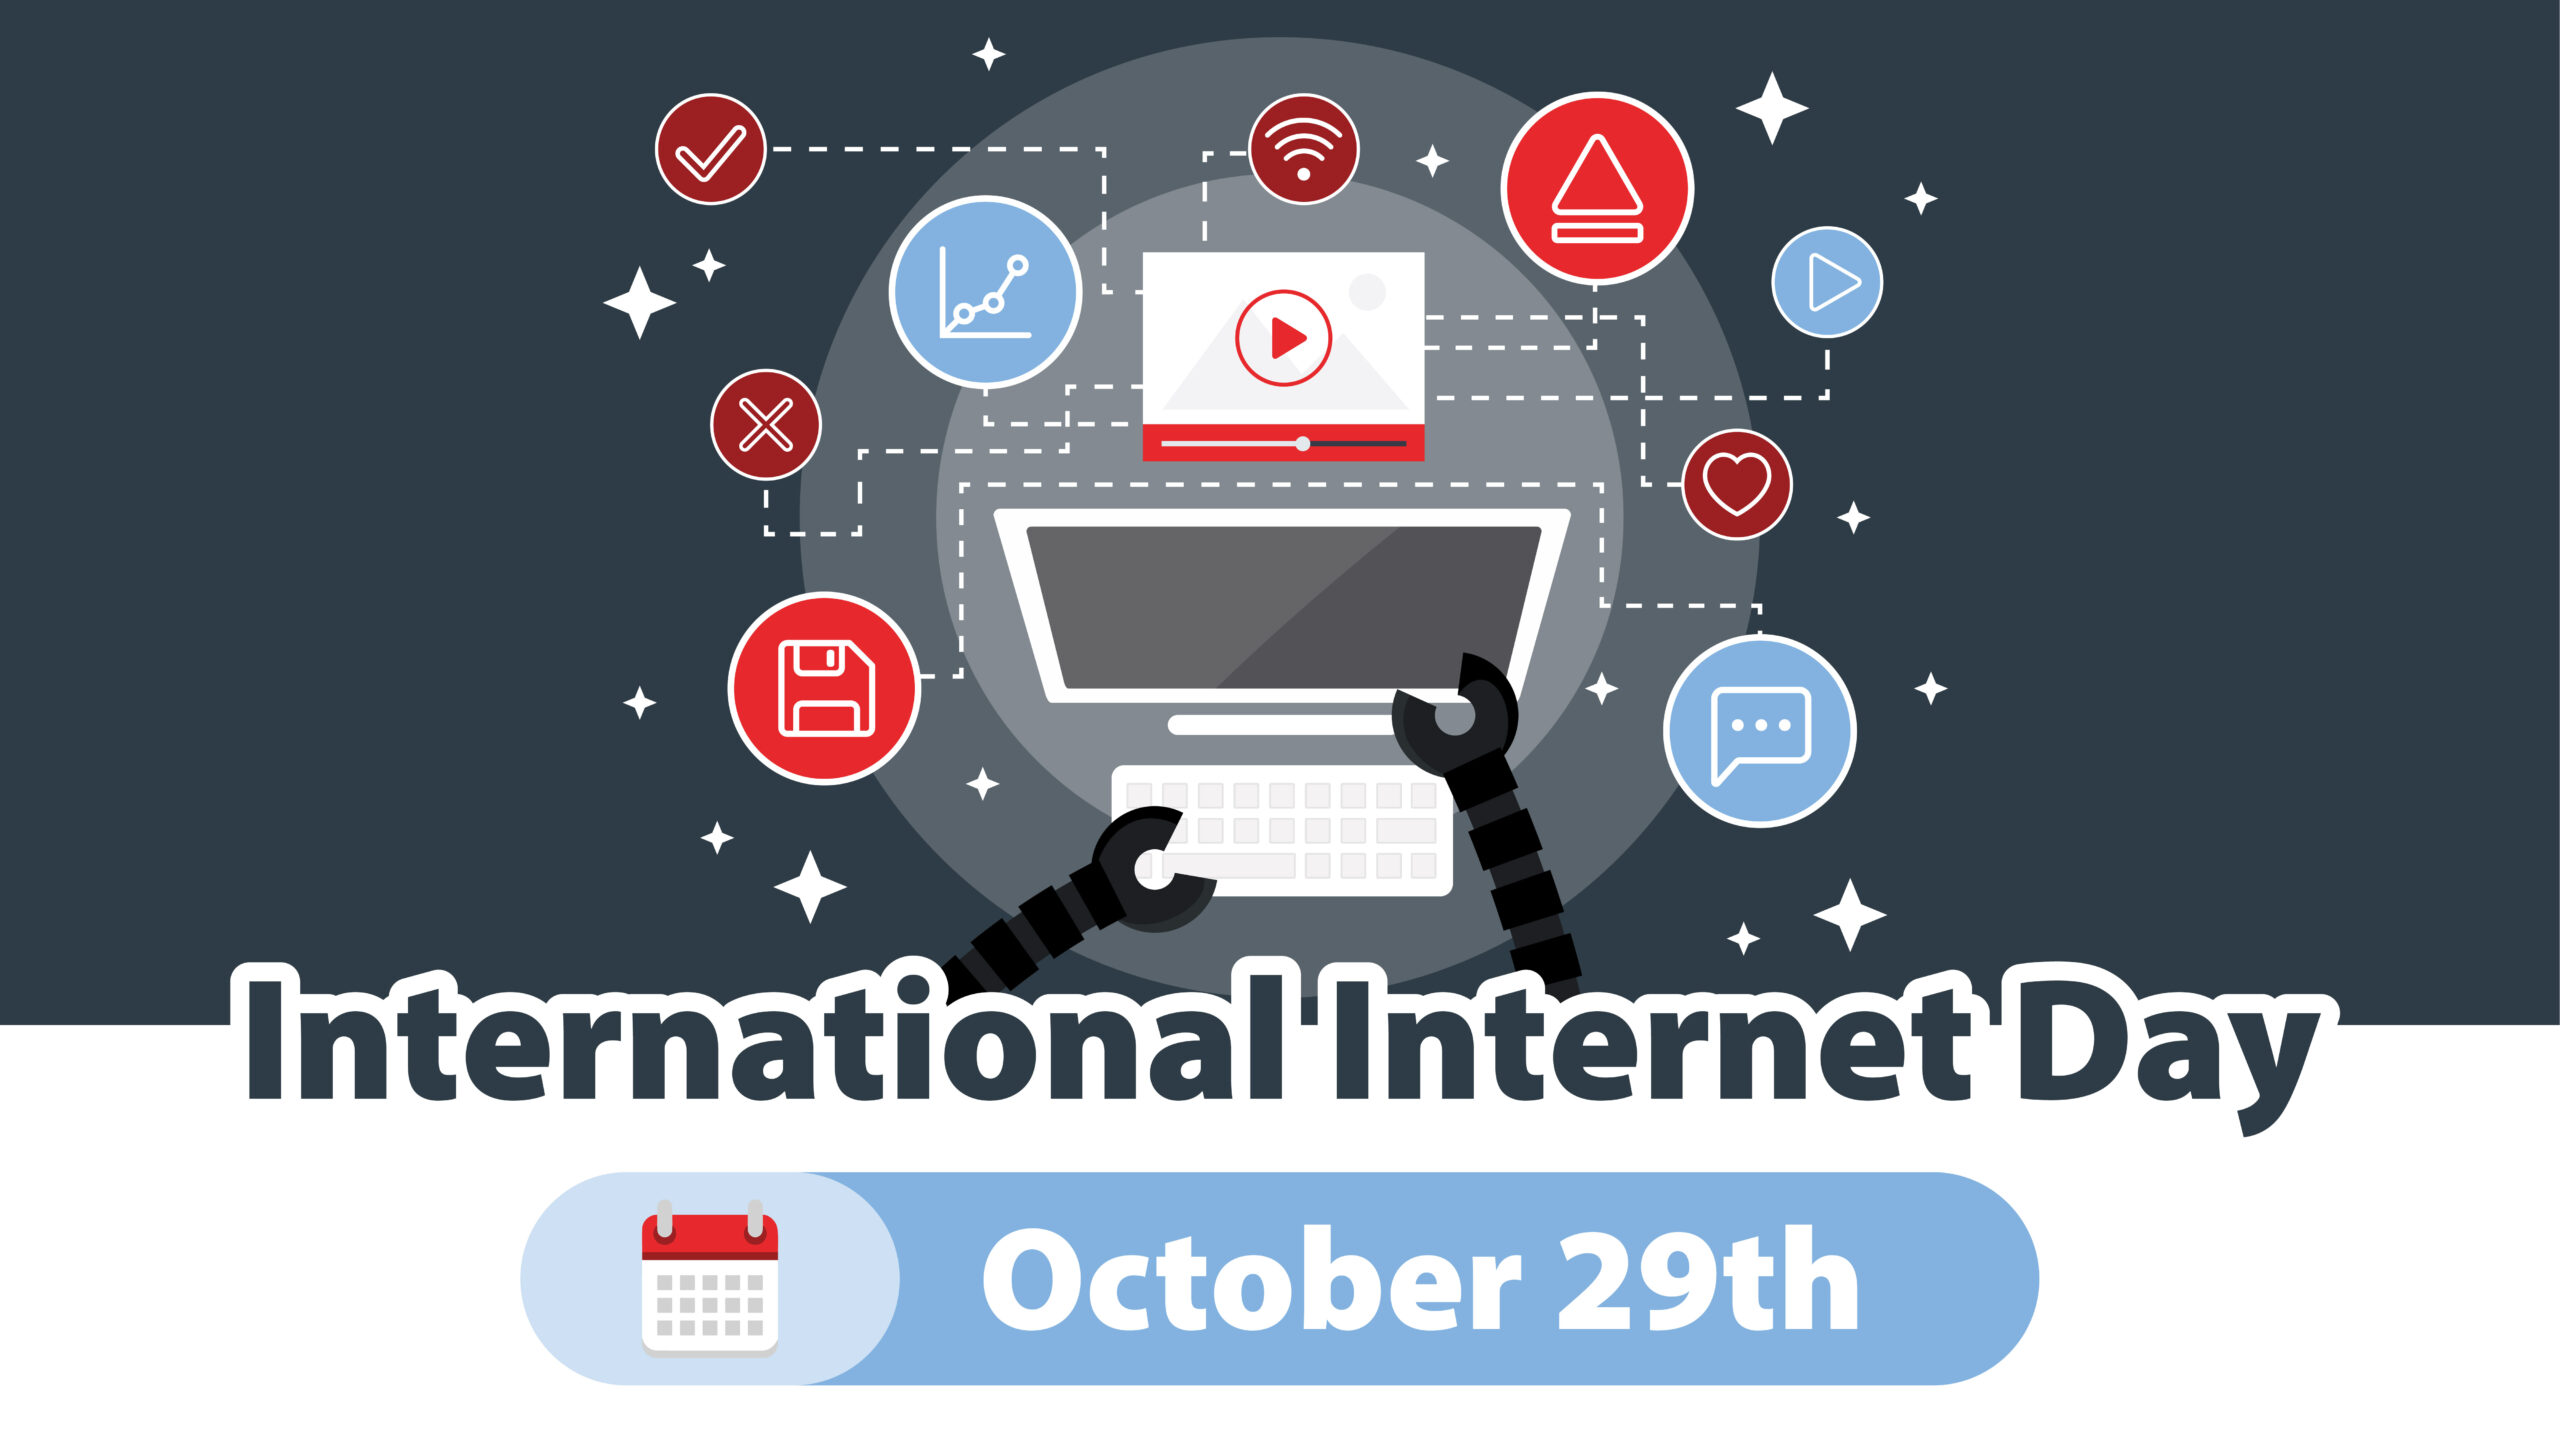 xbert on computer for international internet day